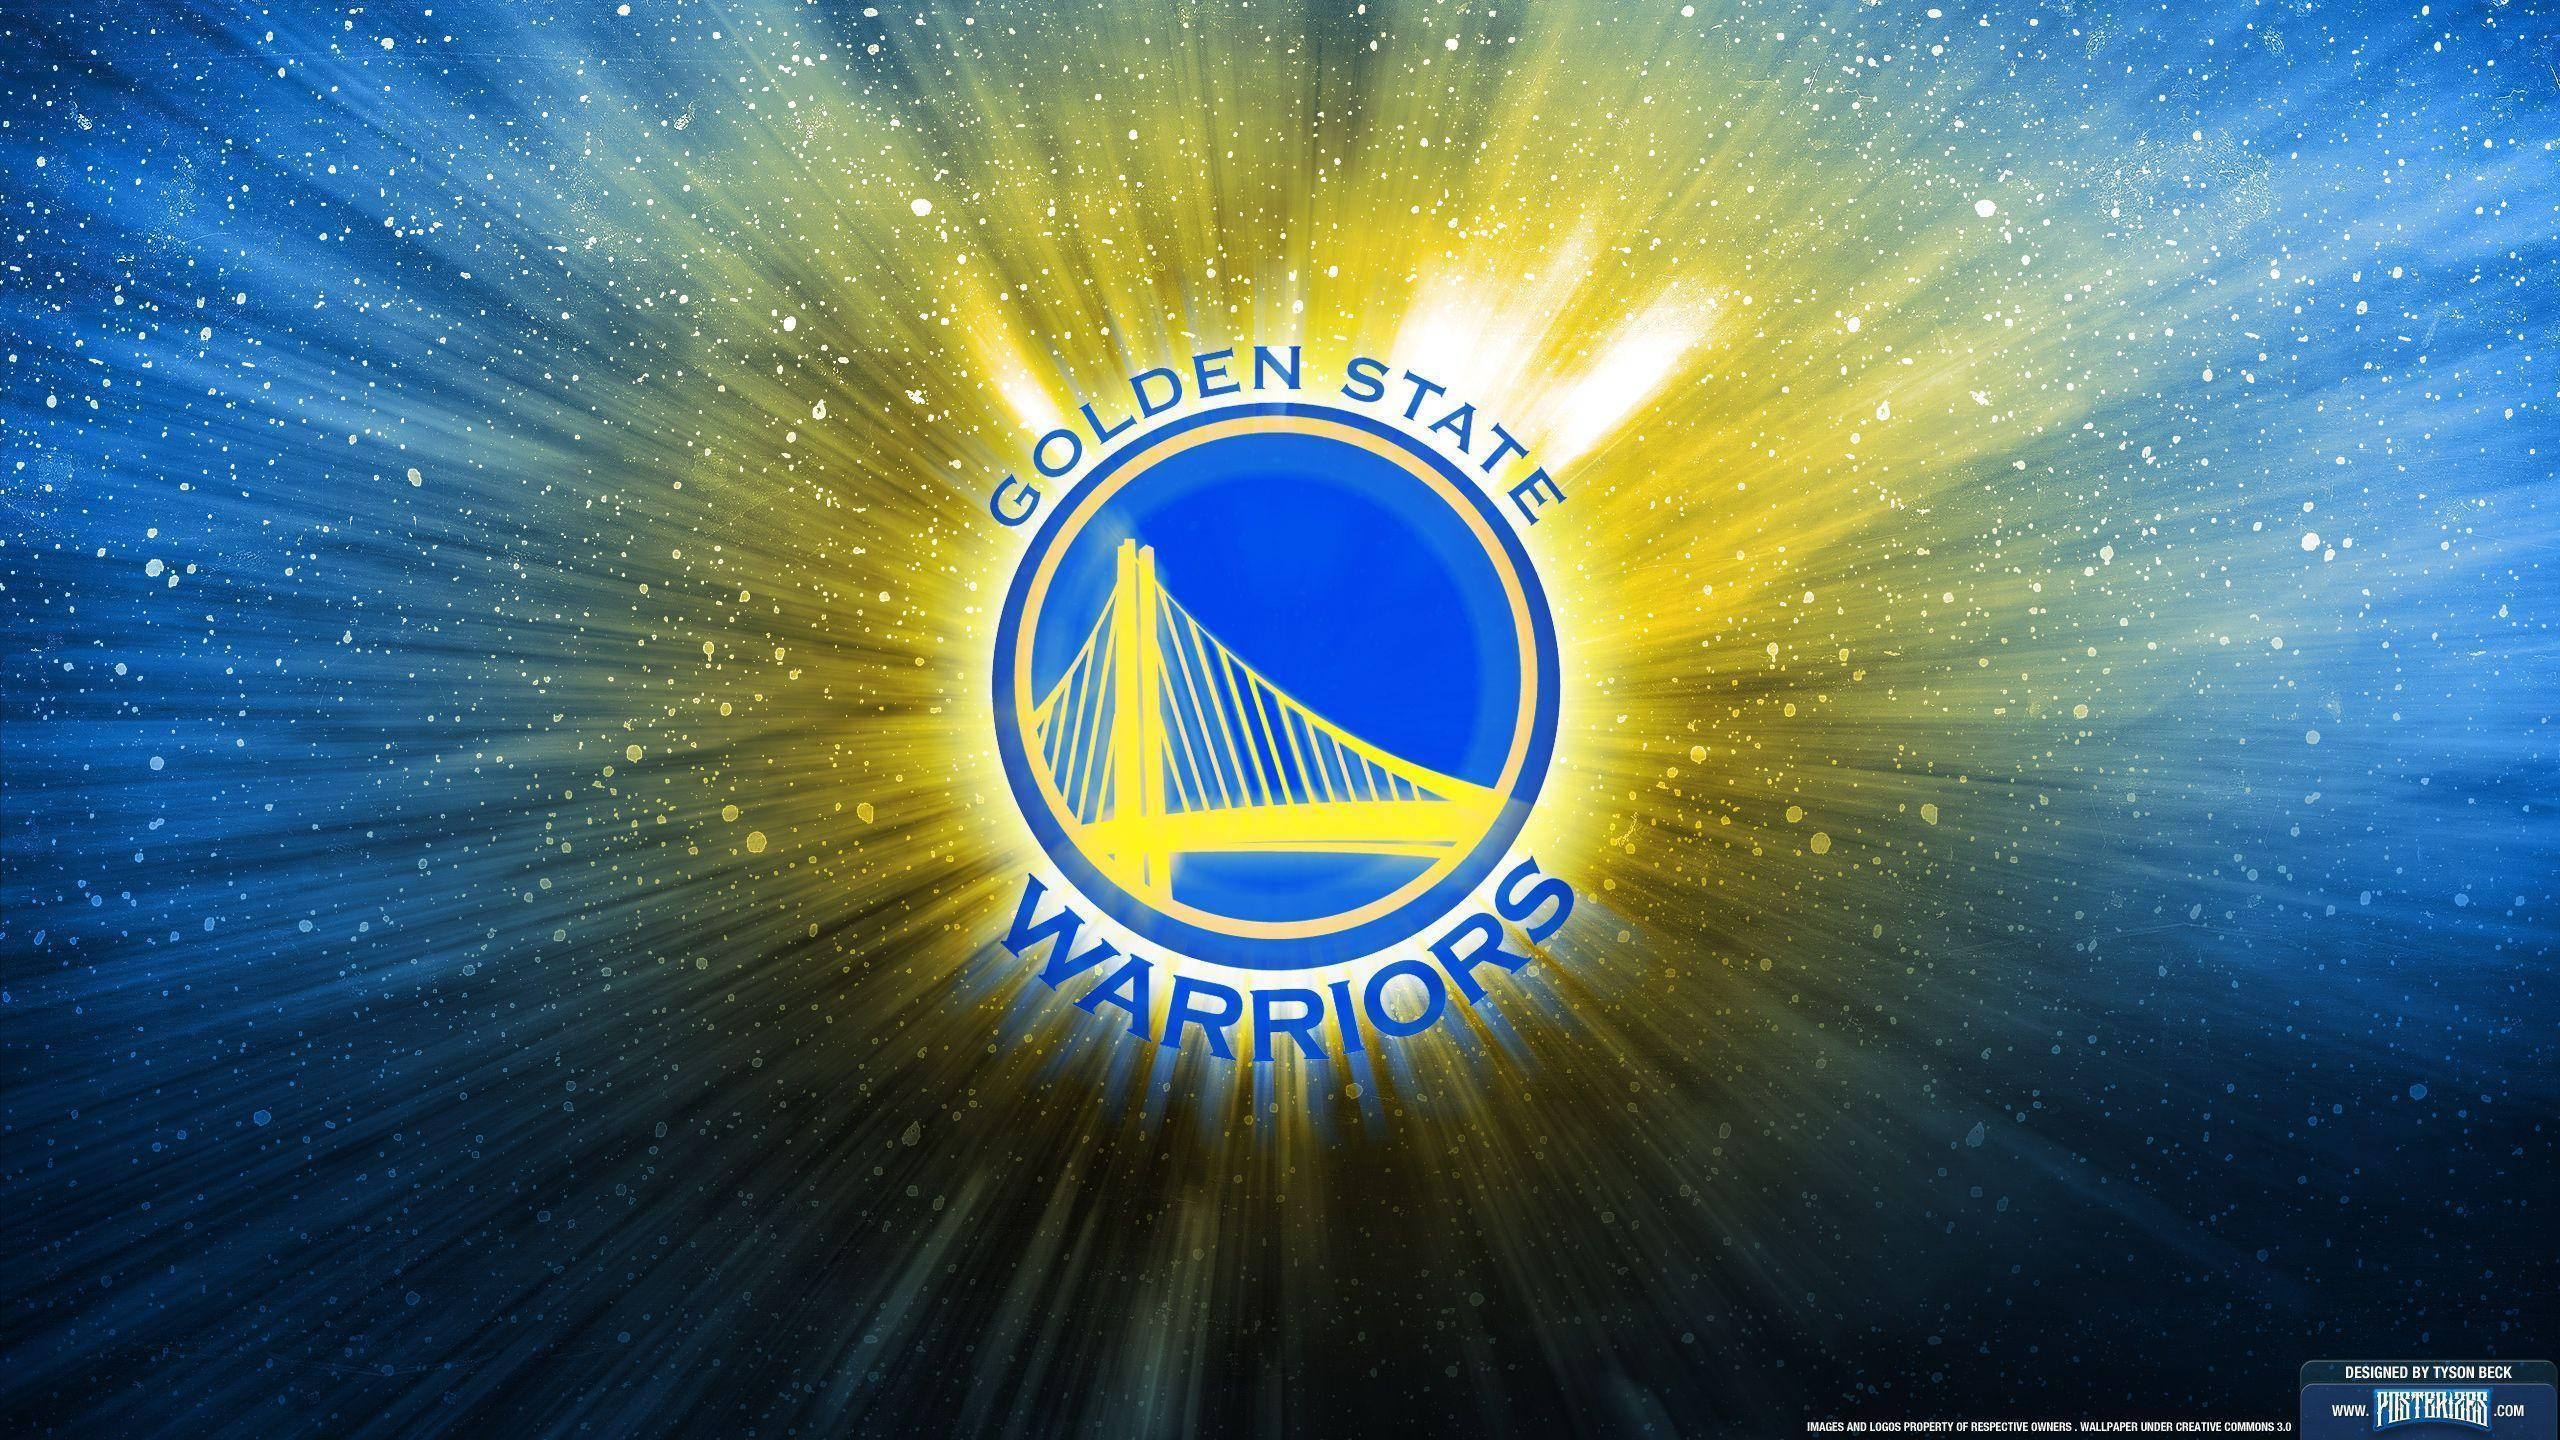 Golden State Warriors Nba Team Poster Background